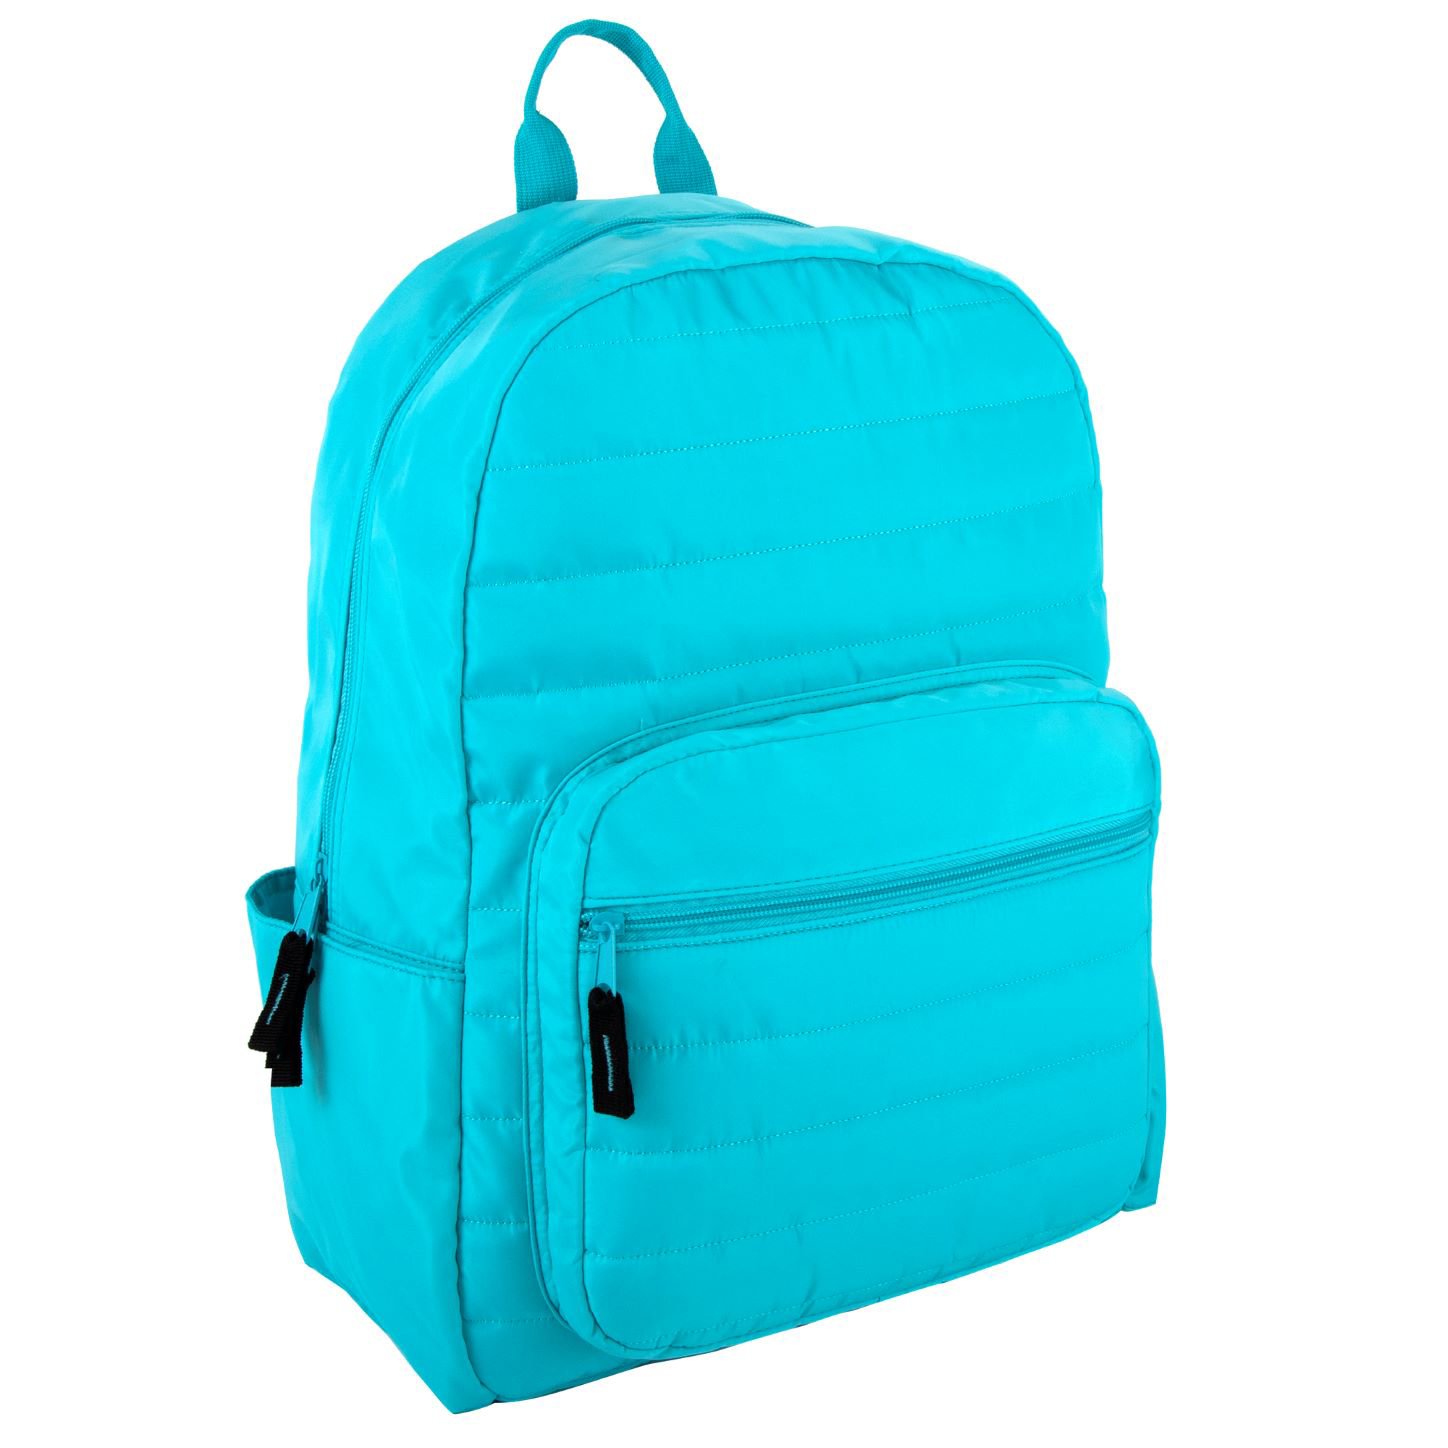 Trailmaker Quilted Nylon Backpack - Teal - Shop Backpacks at H-E-B